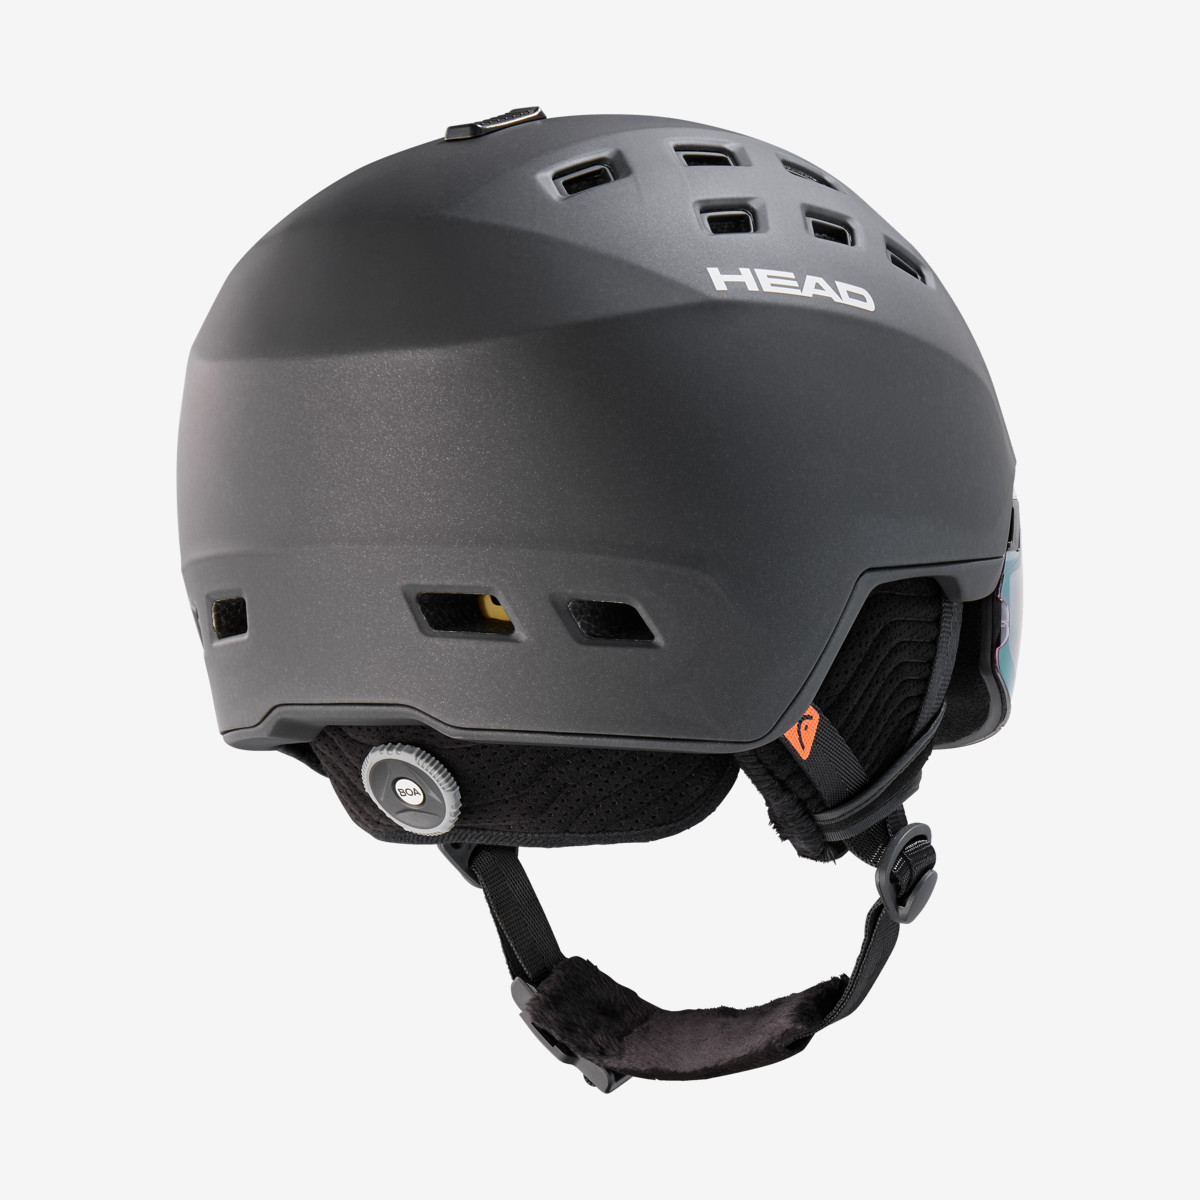 Ski Visor Helmet -  head RADAR 5K PHOTO MIPS VISOR SKI HELMET